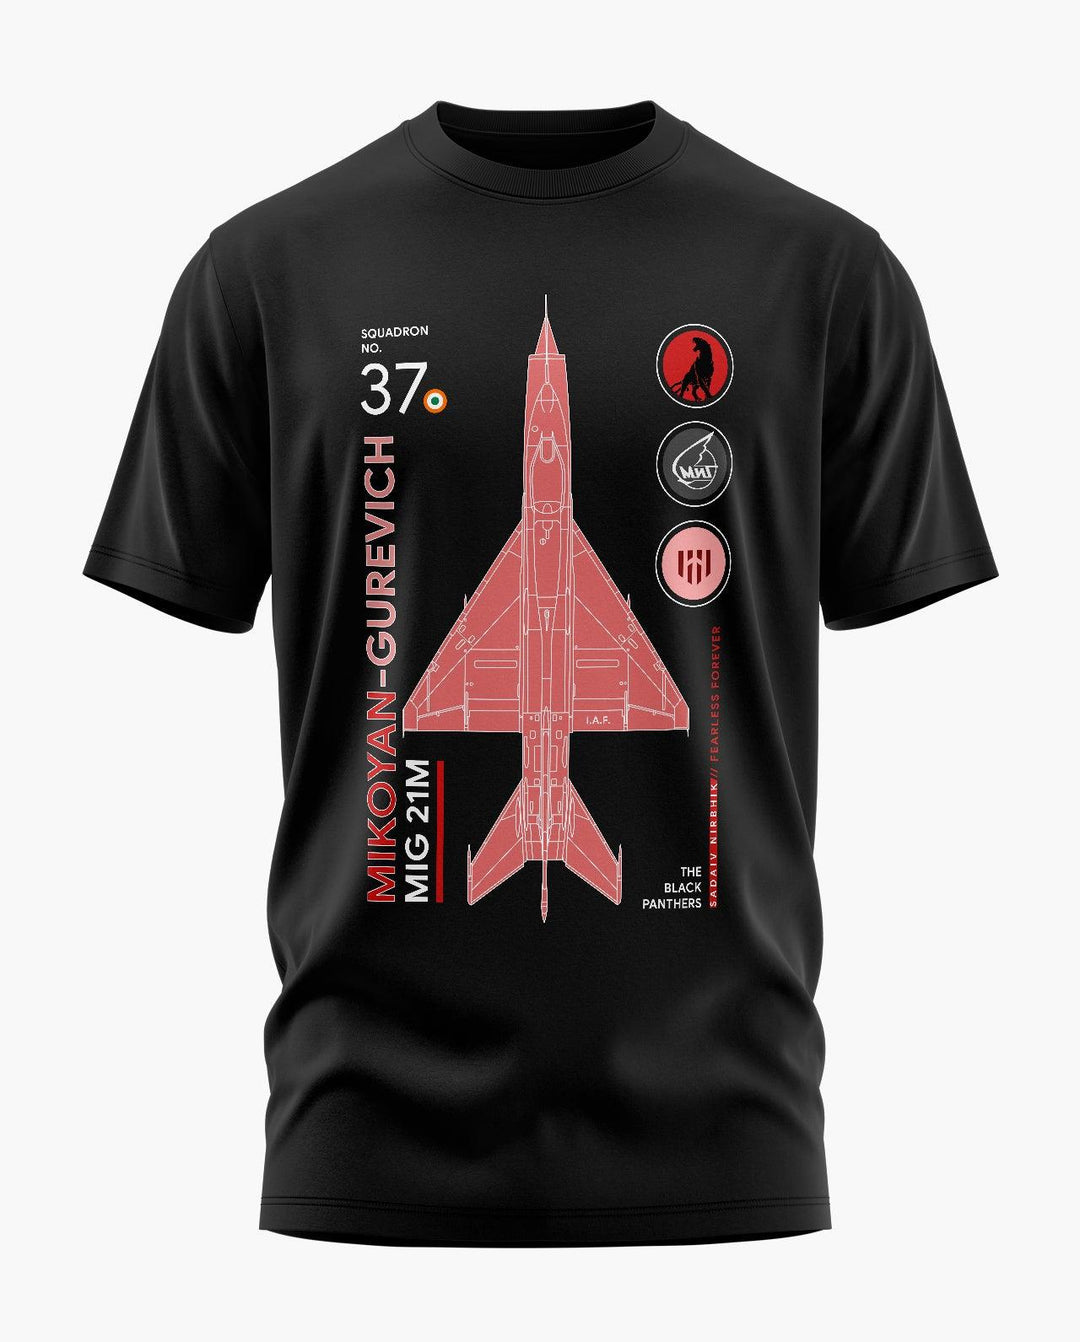 Black Panthers Squadron 37 T-Shirt - Aero Armour